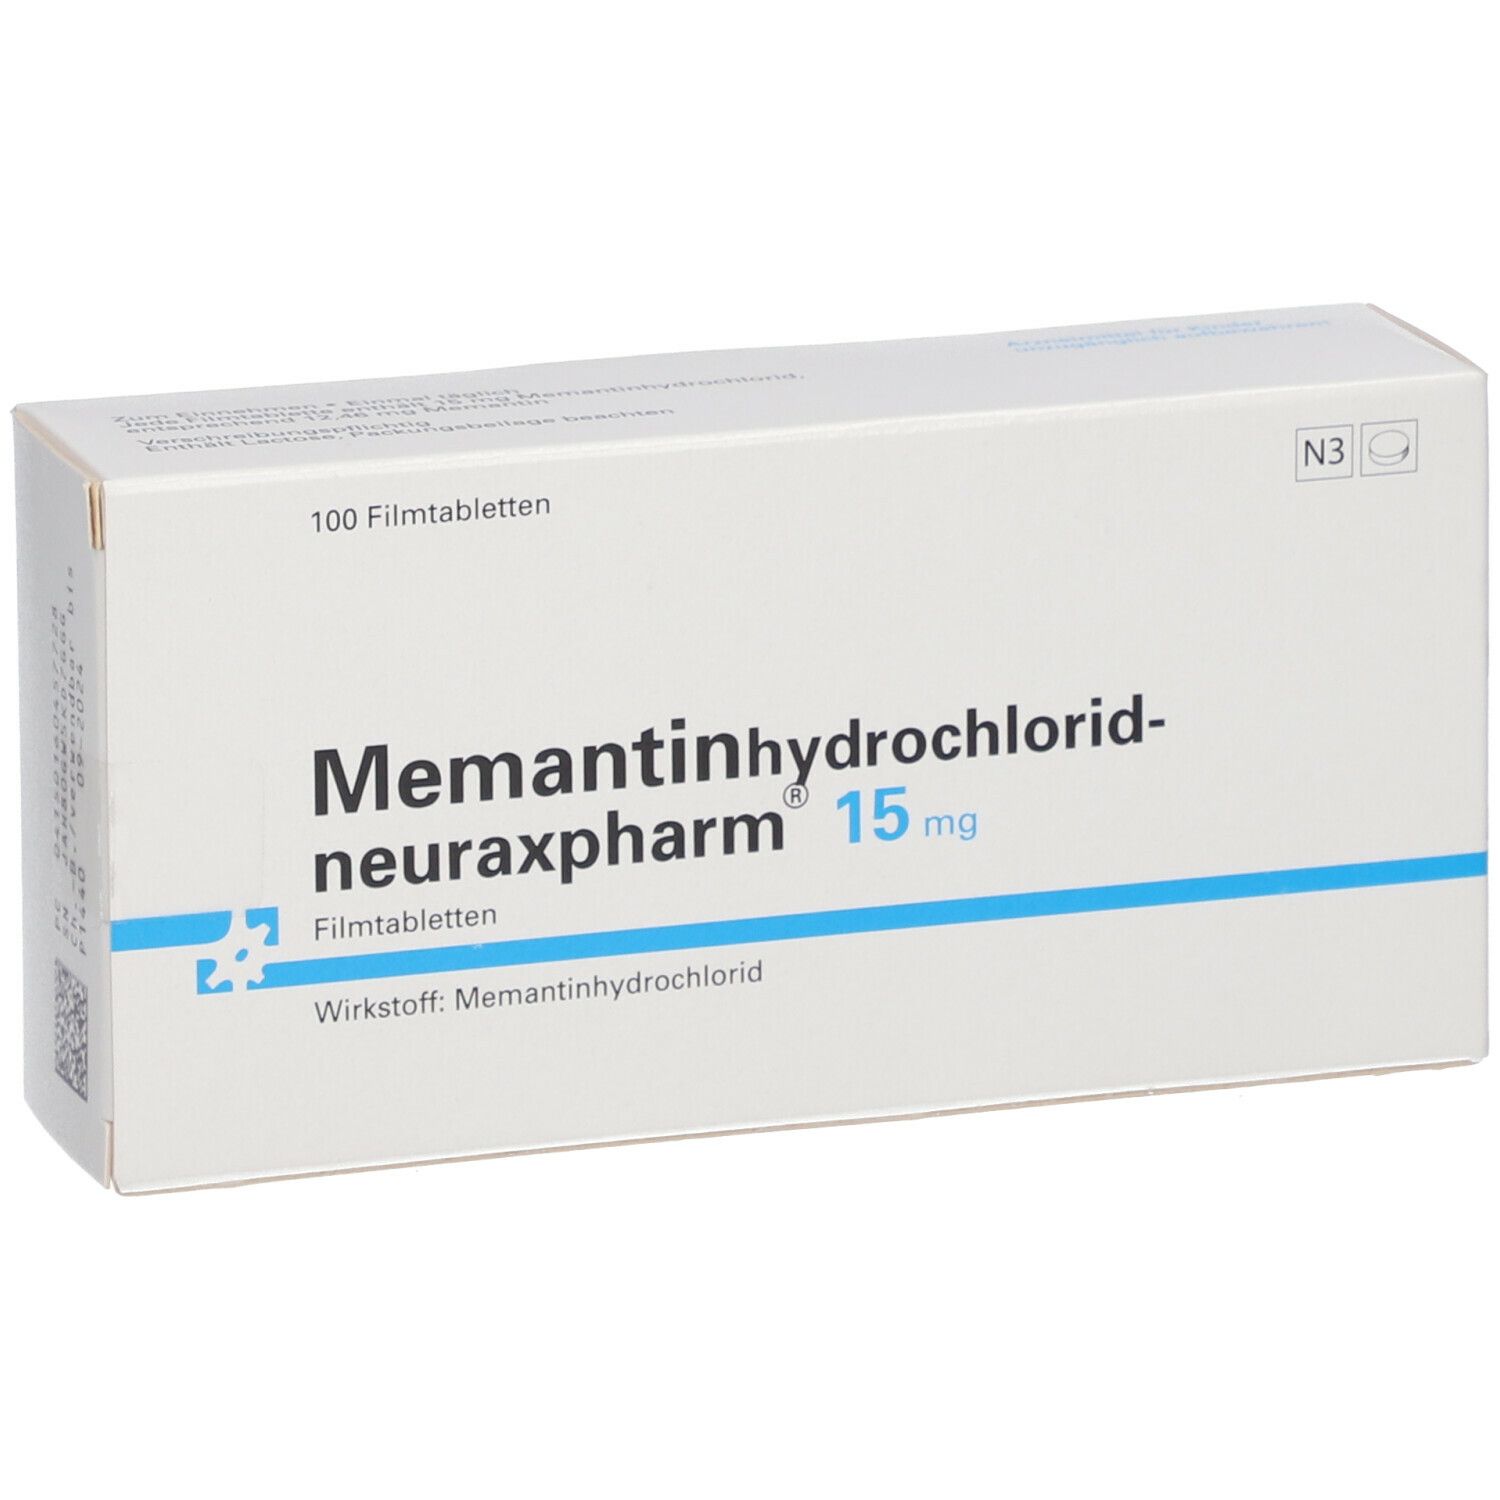 Memantinhydrochlorid-Neuraxpharm 15 mg